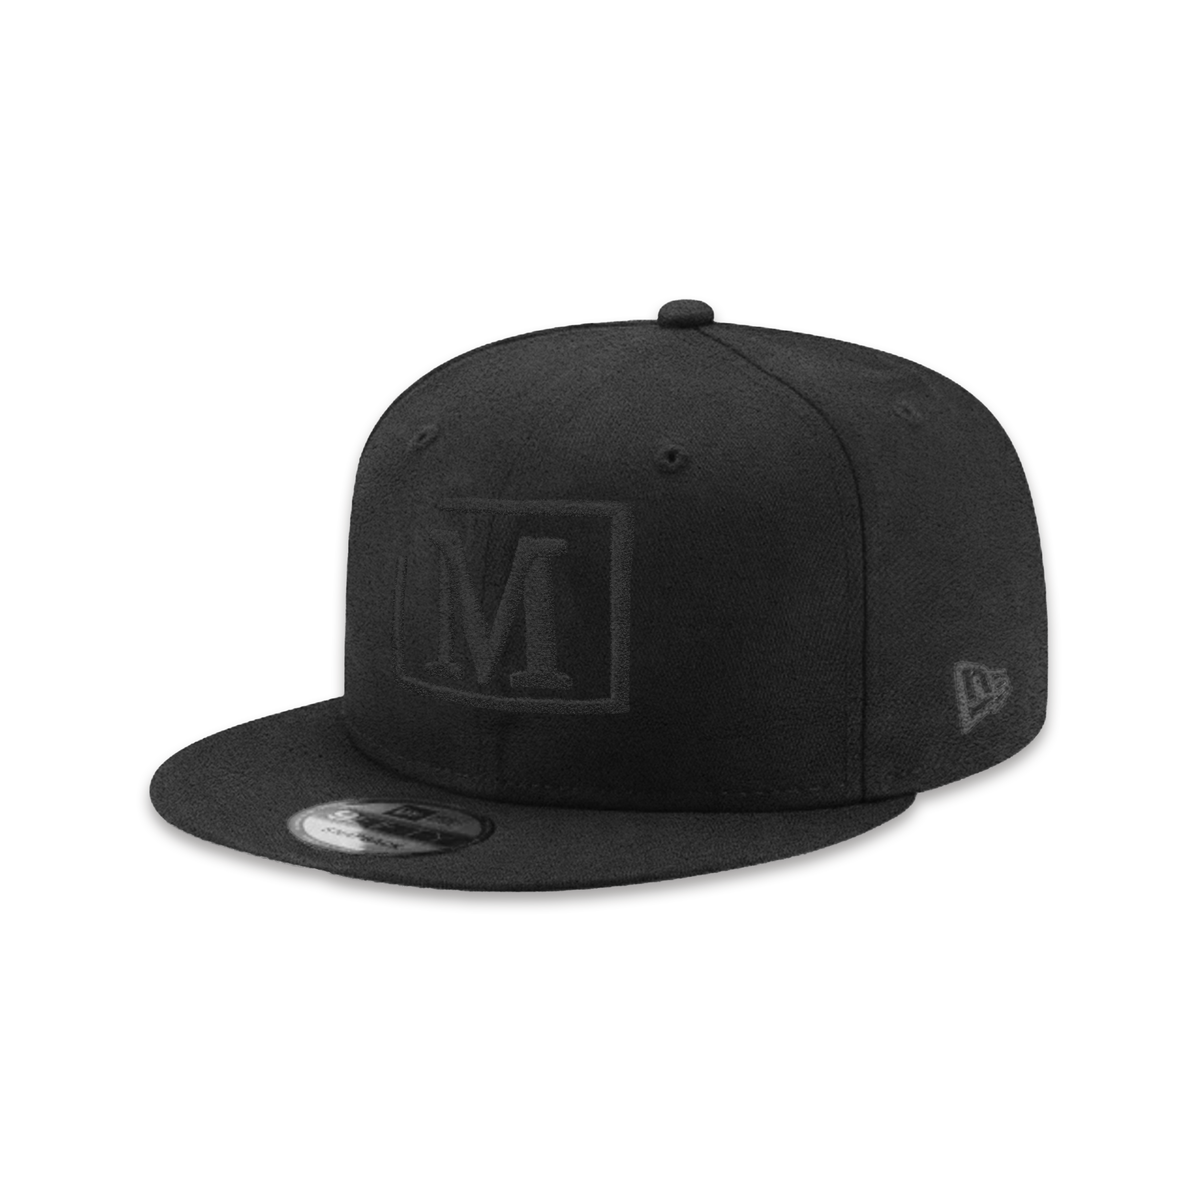 MDB Brand x New Era 9Fifty Snapback Embroidered Baseball Cap - Suede